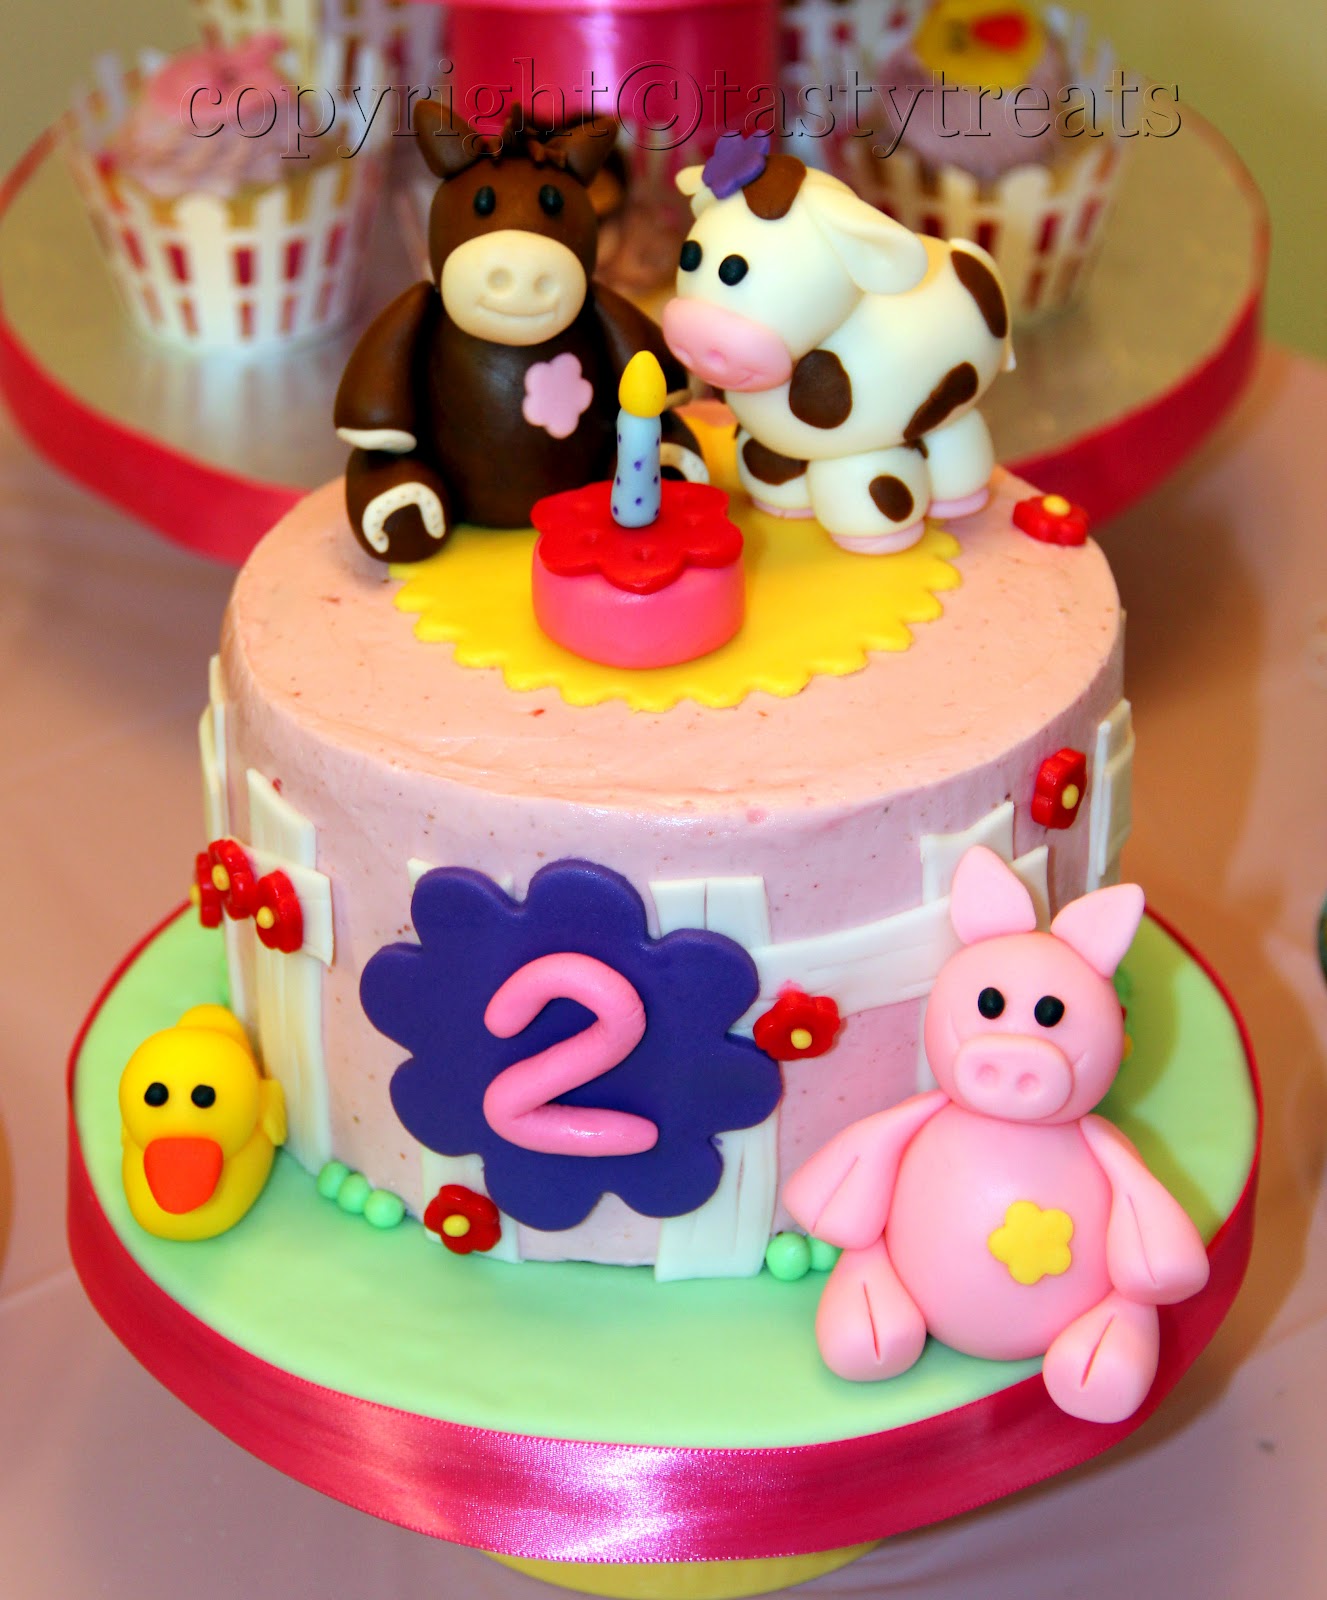 cool cupcake designs The Birthday Cakes